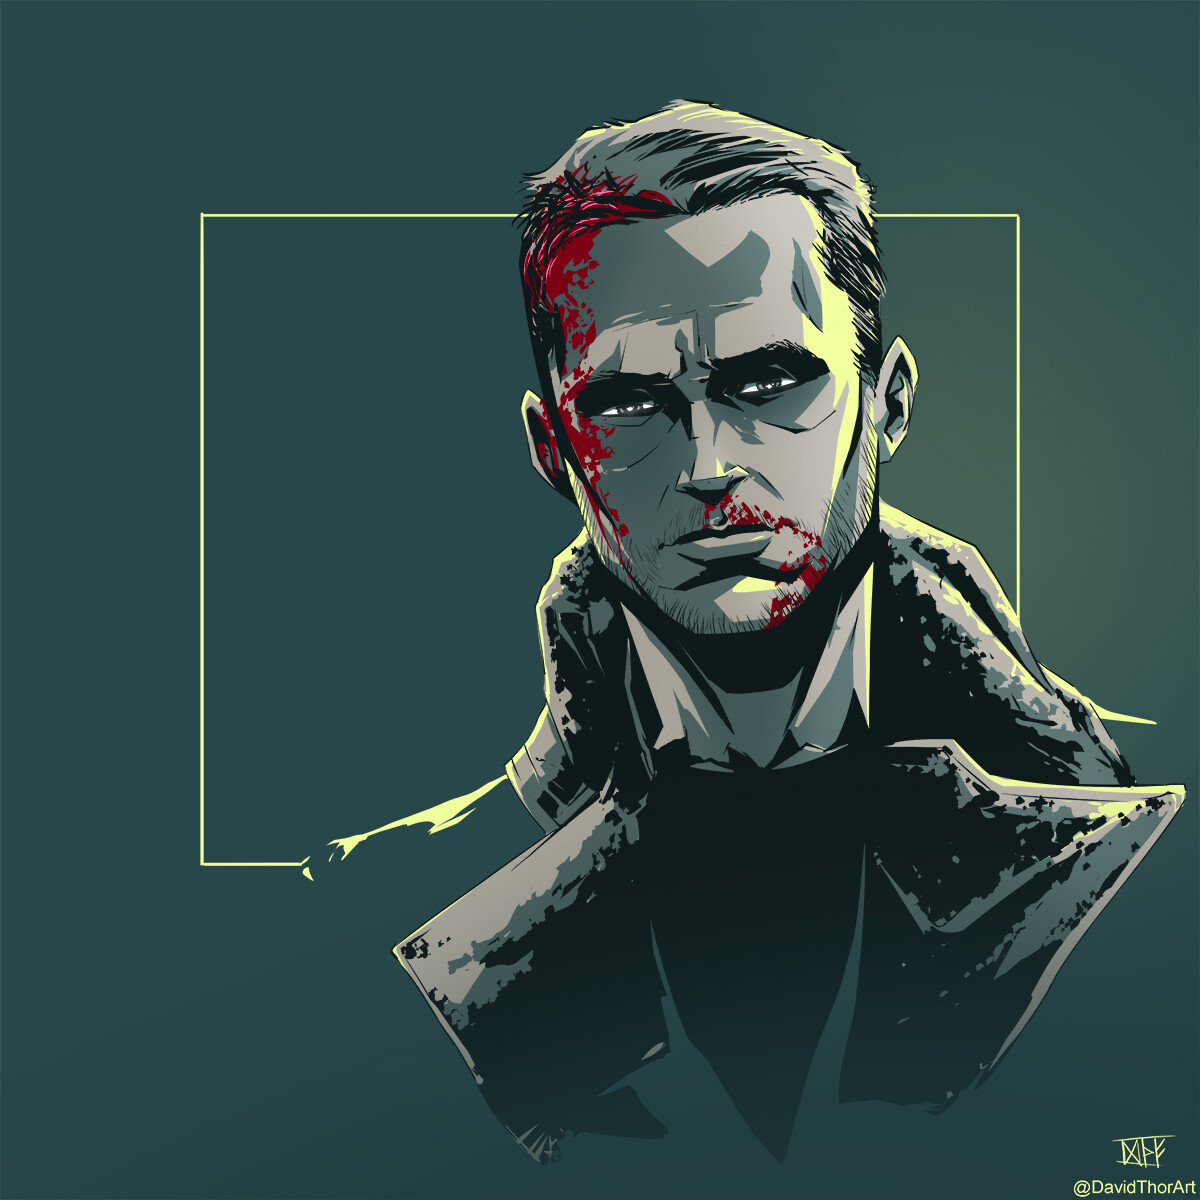 ArtStation - Blade Runner Portraits 1